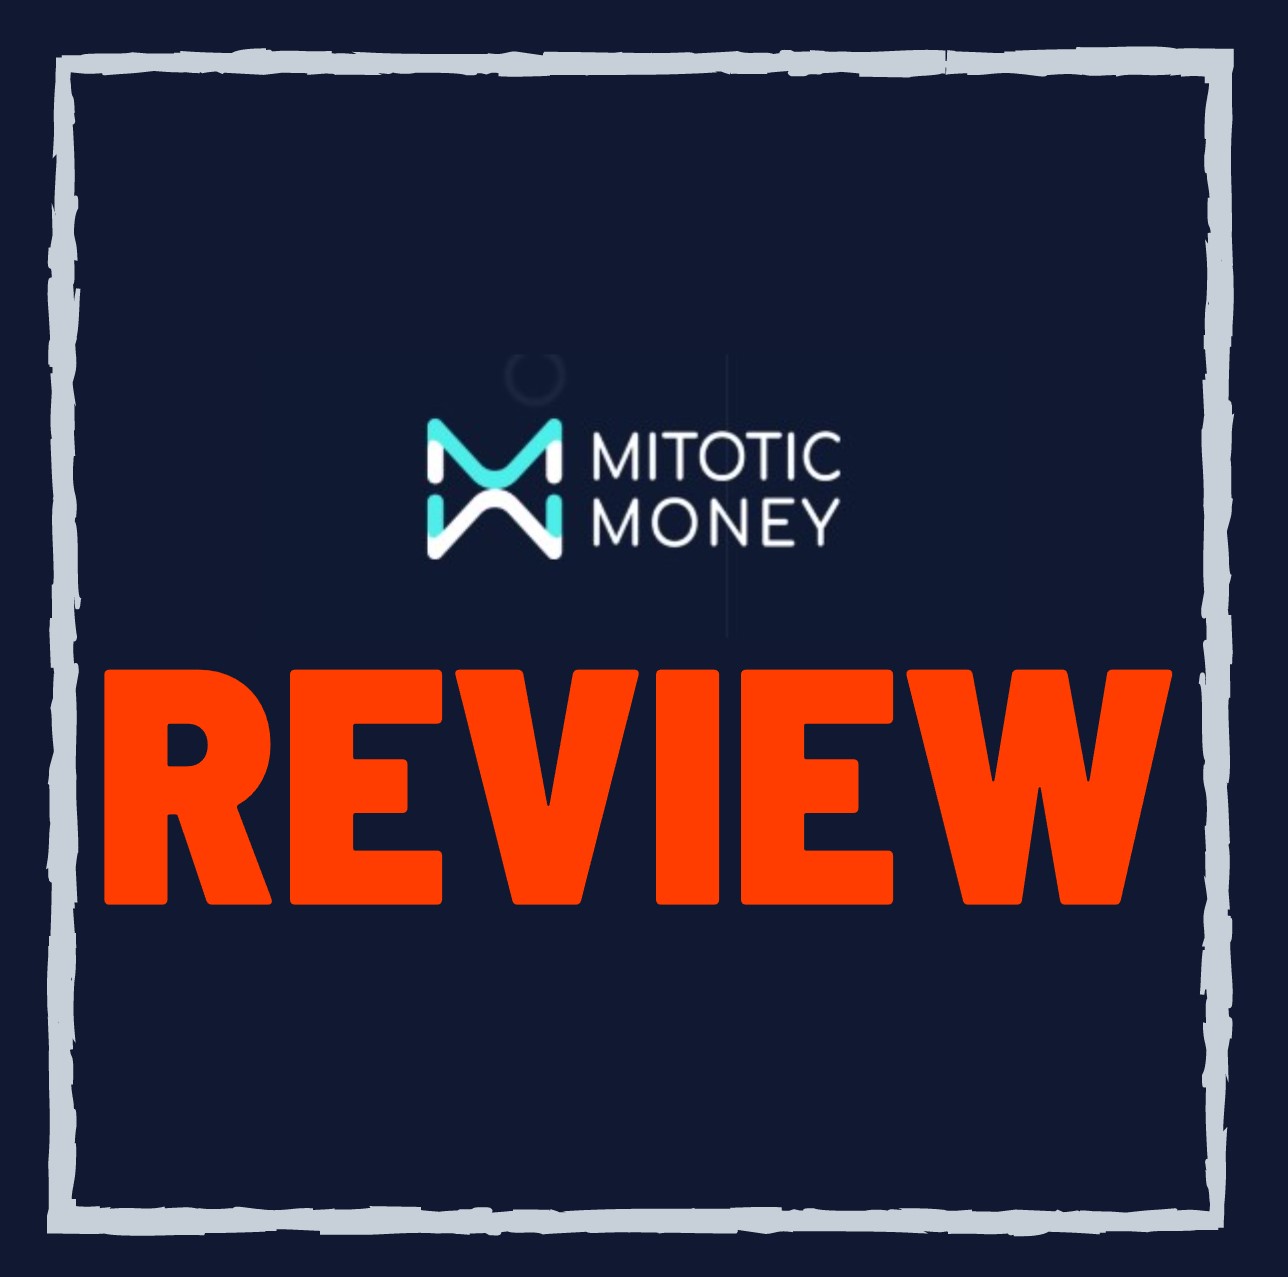 Mitotic Money Review – Legit or Another Fake CEO Ponzi Scheme?